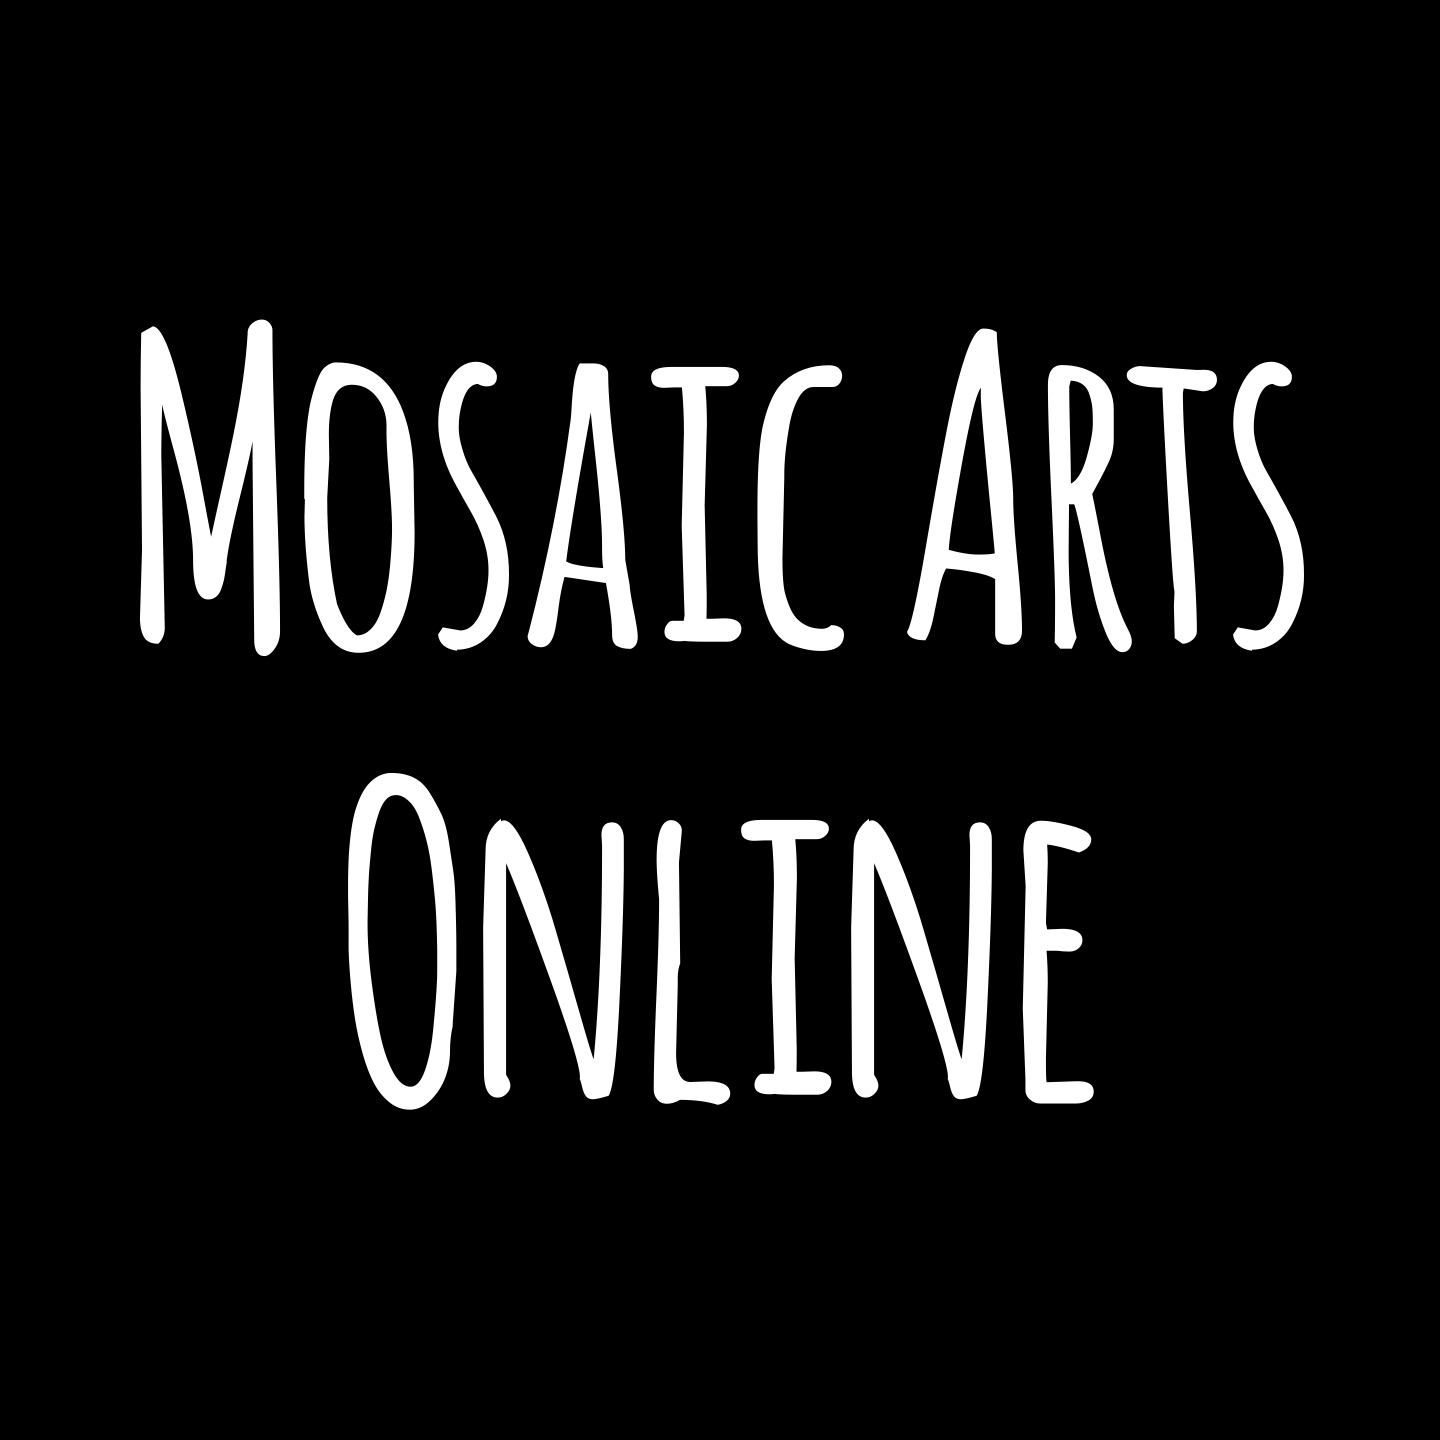 Mosaic Arts Online